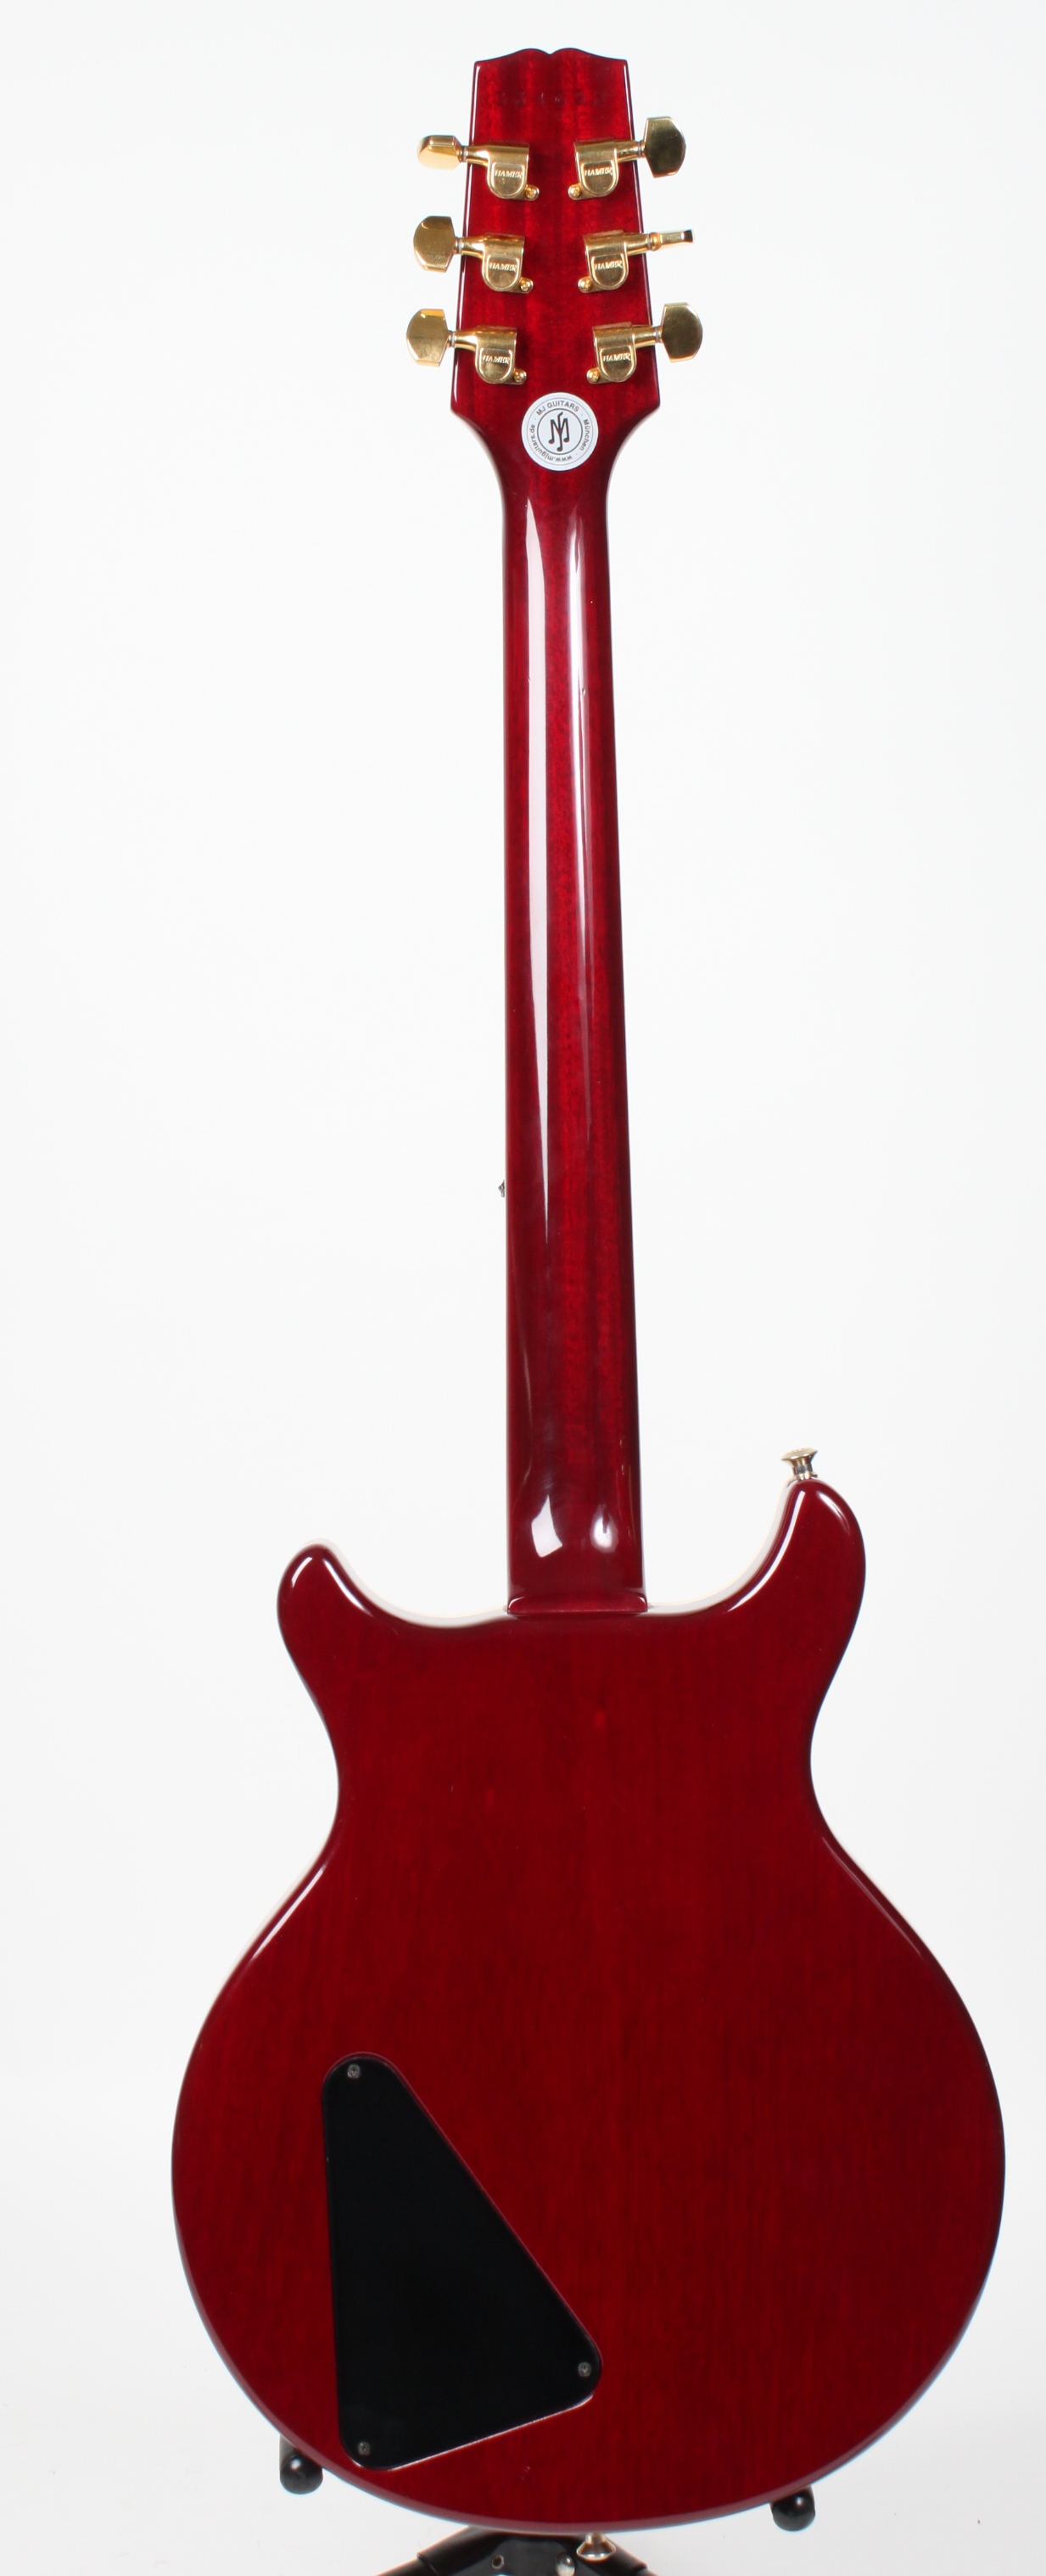 Hamer USA Special FM 1993 Cherry Sunburst Guitar For Sale MJ 